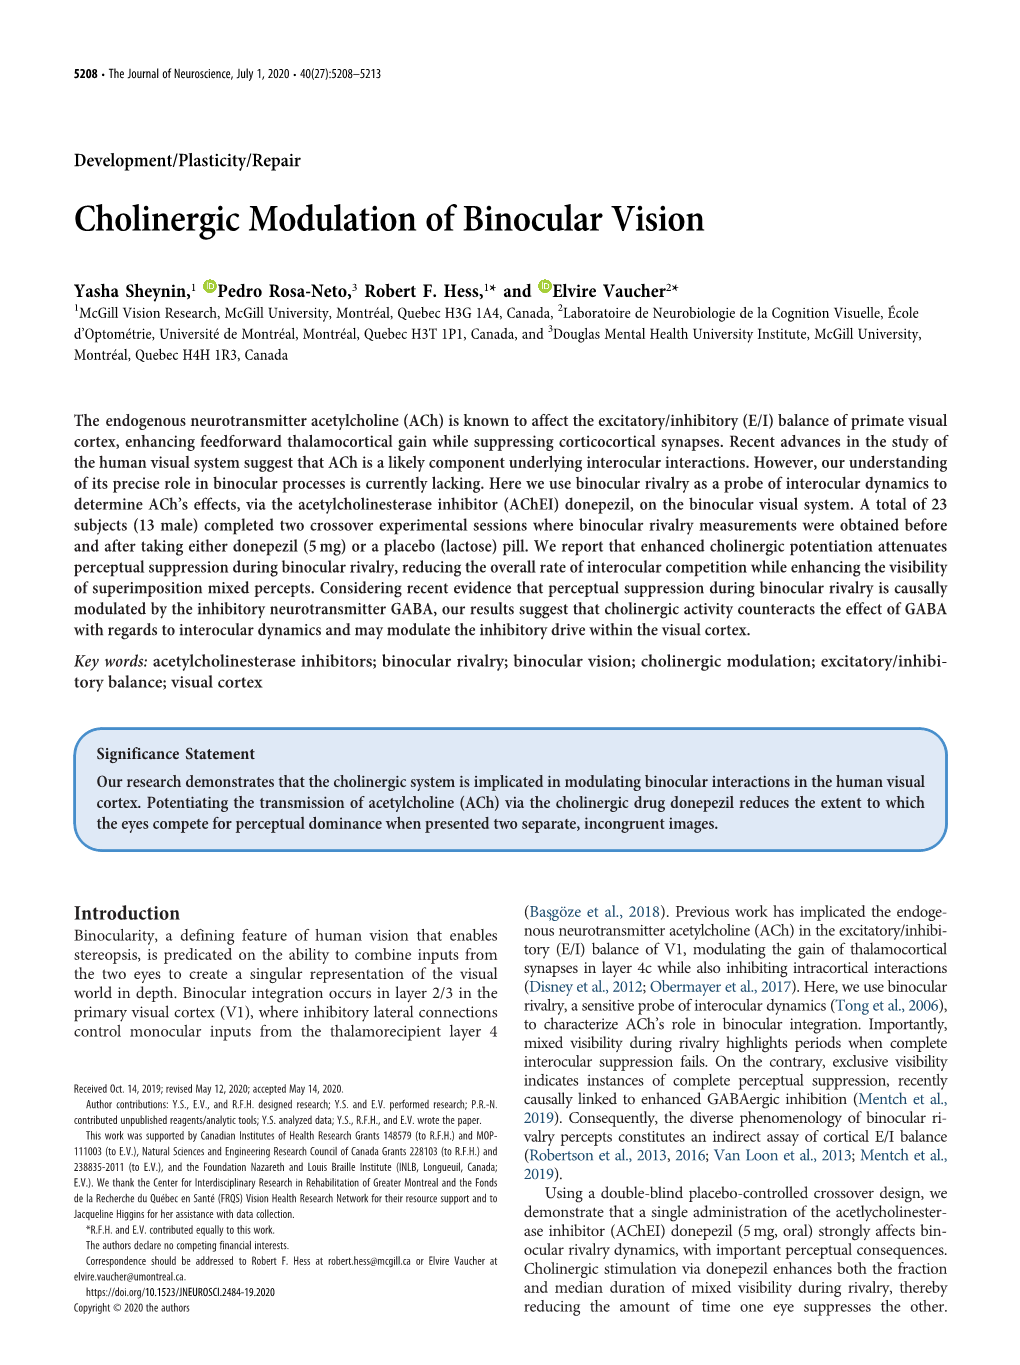 Cholinergic Modulation of Binocular Vision